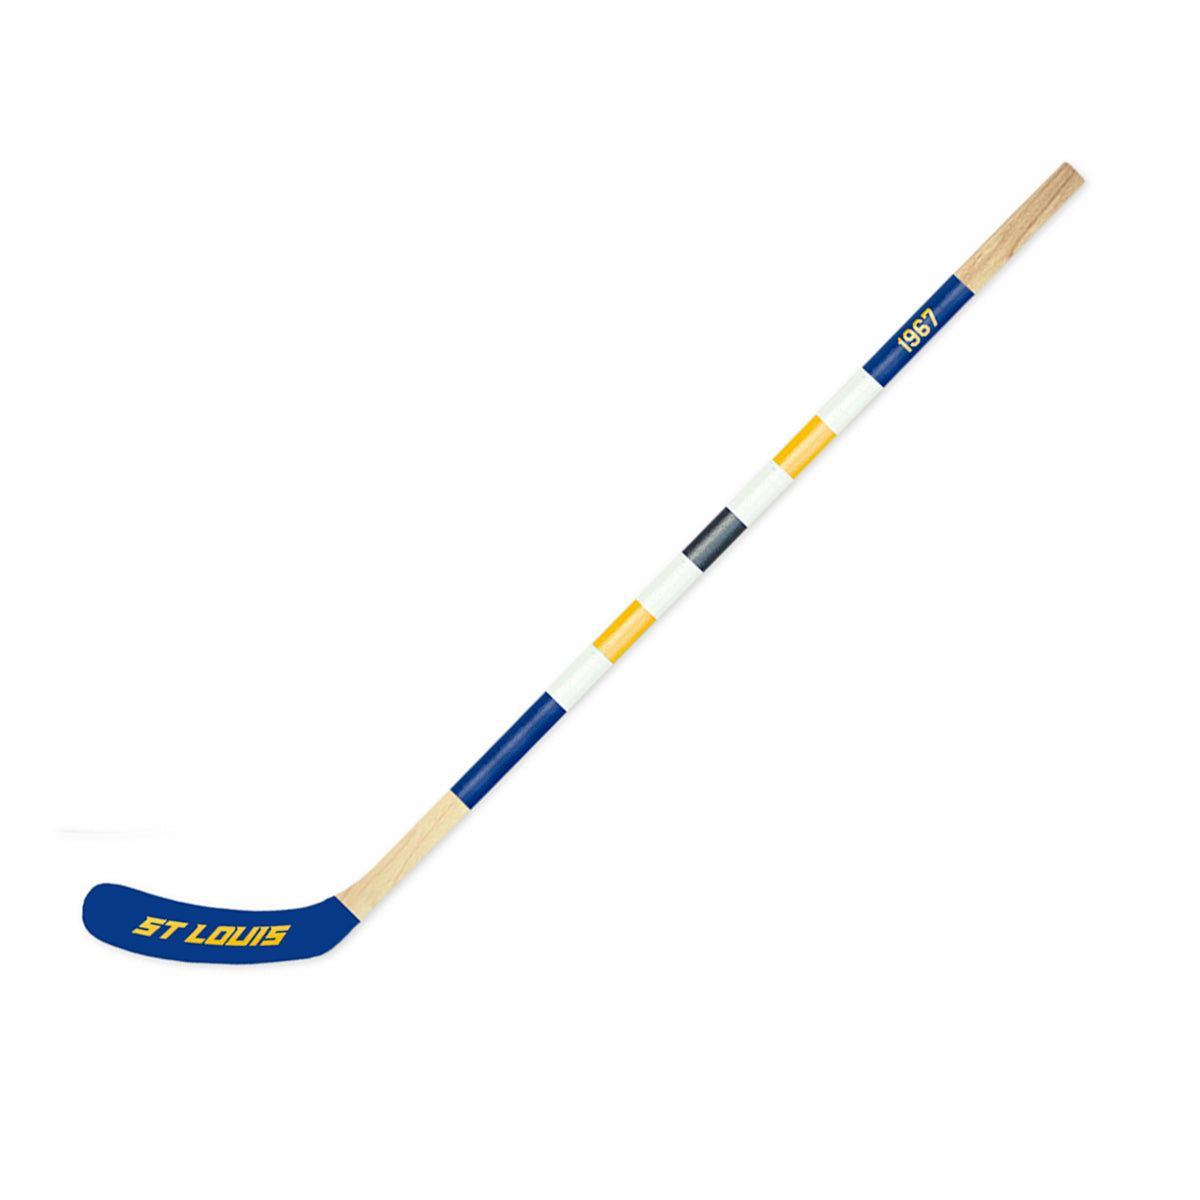 St. Louis Mitchell Hockey Stick